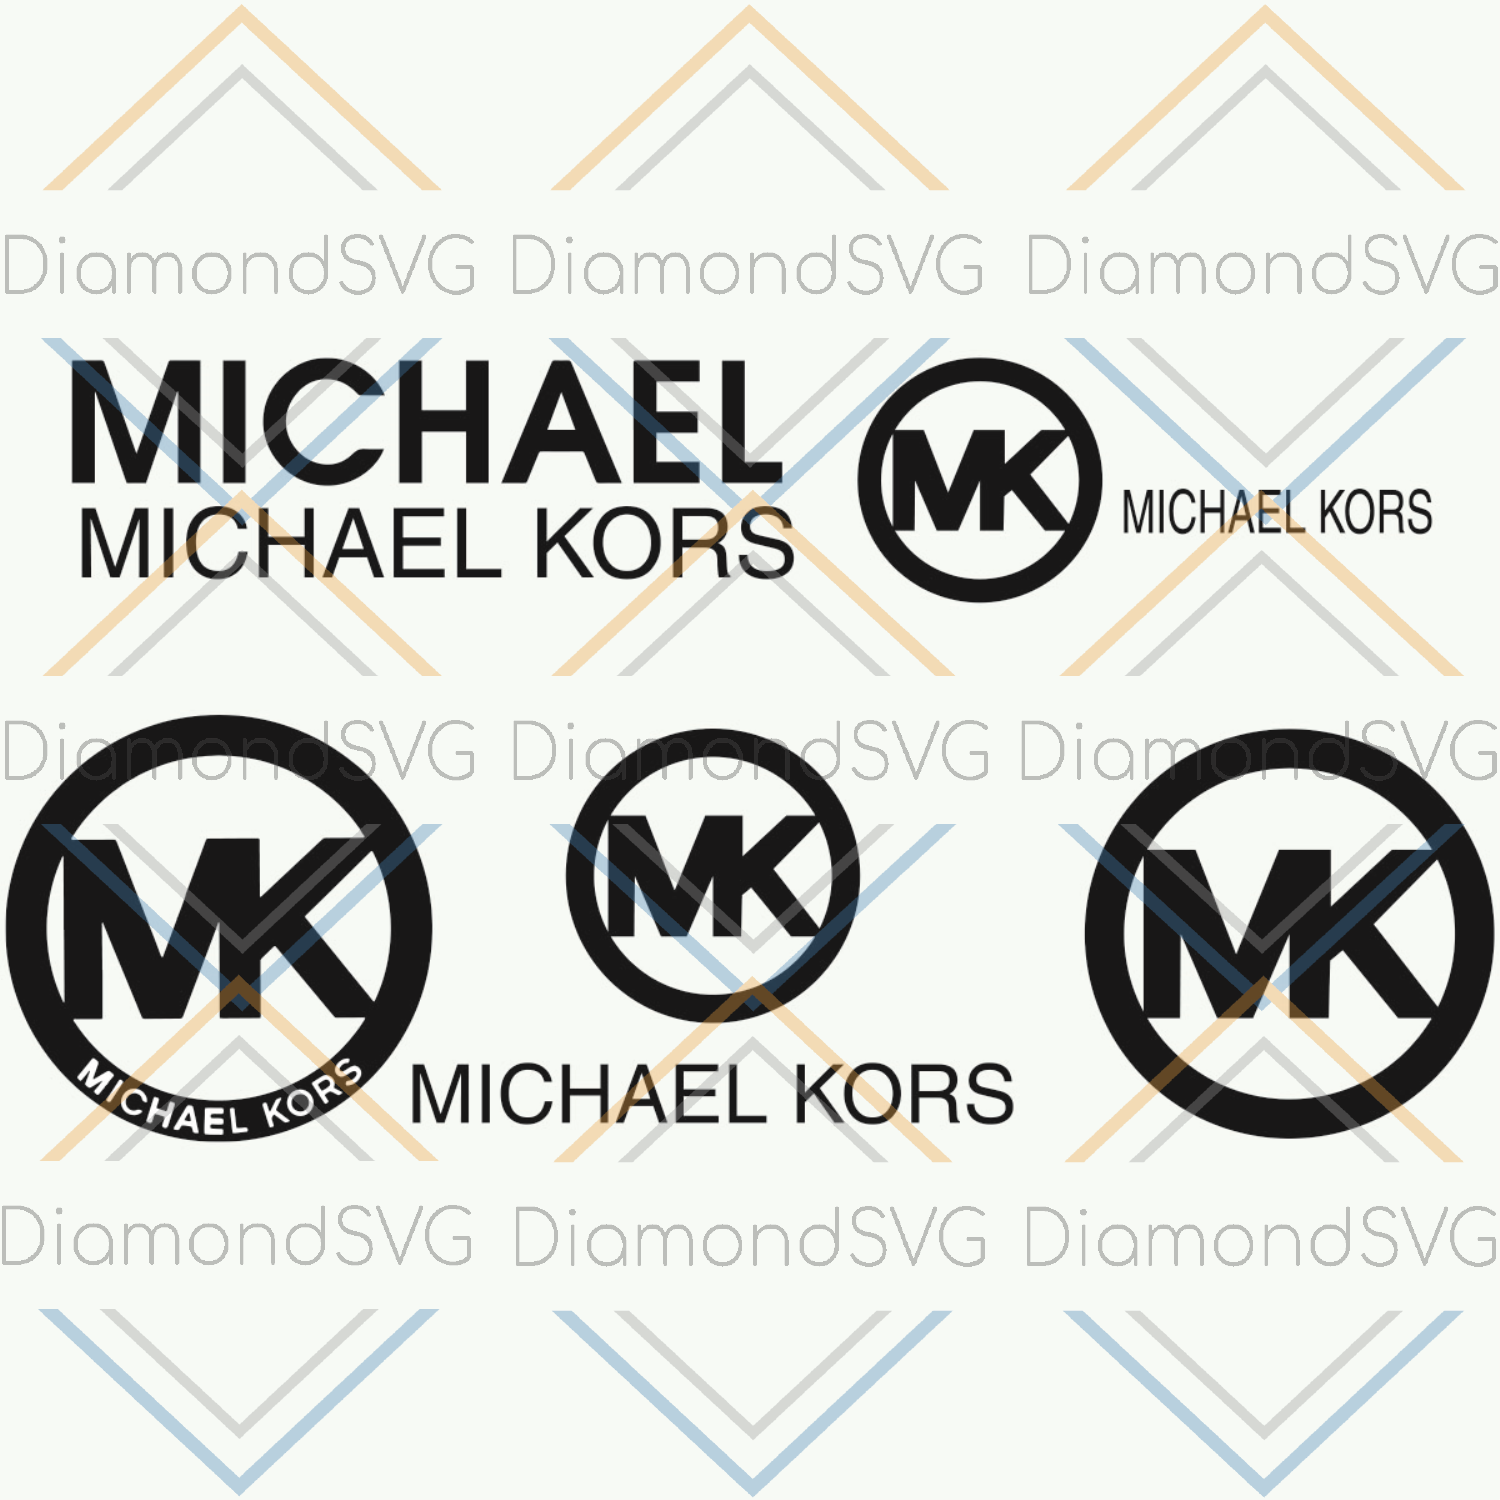 Michael Kors logo Bundle SVG, Michael Kors logo, Michael Kors SVG,